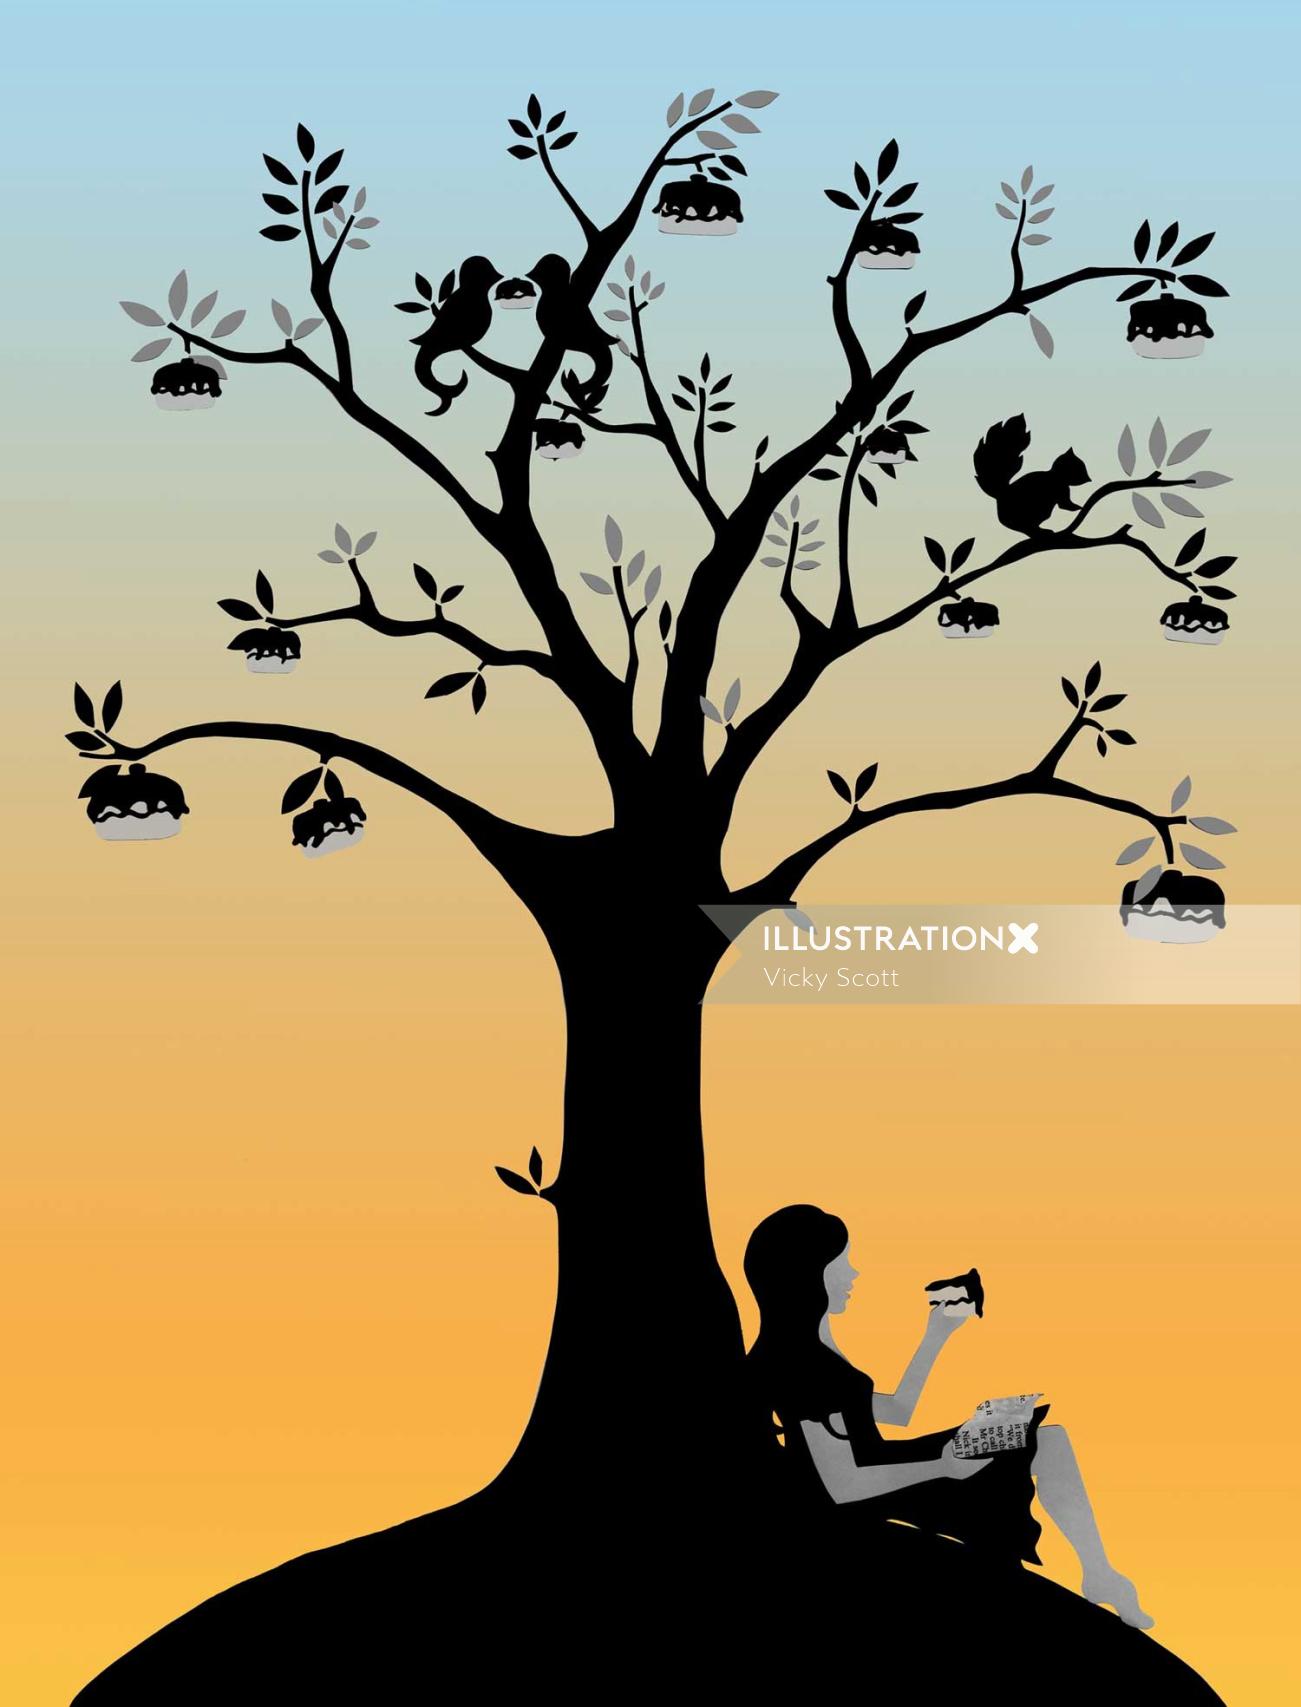 sunset illustration, Girl below tree